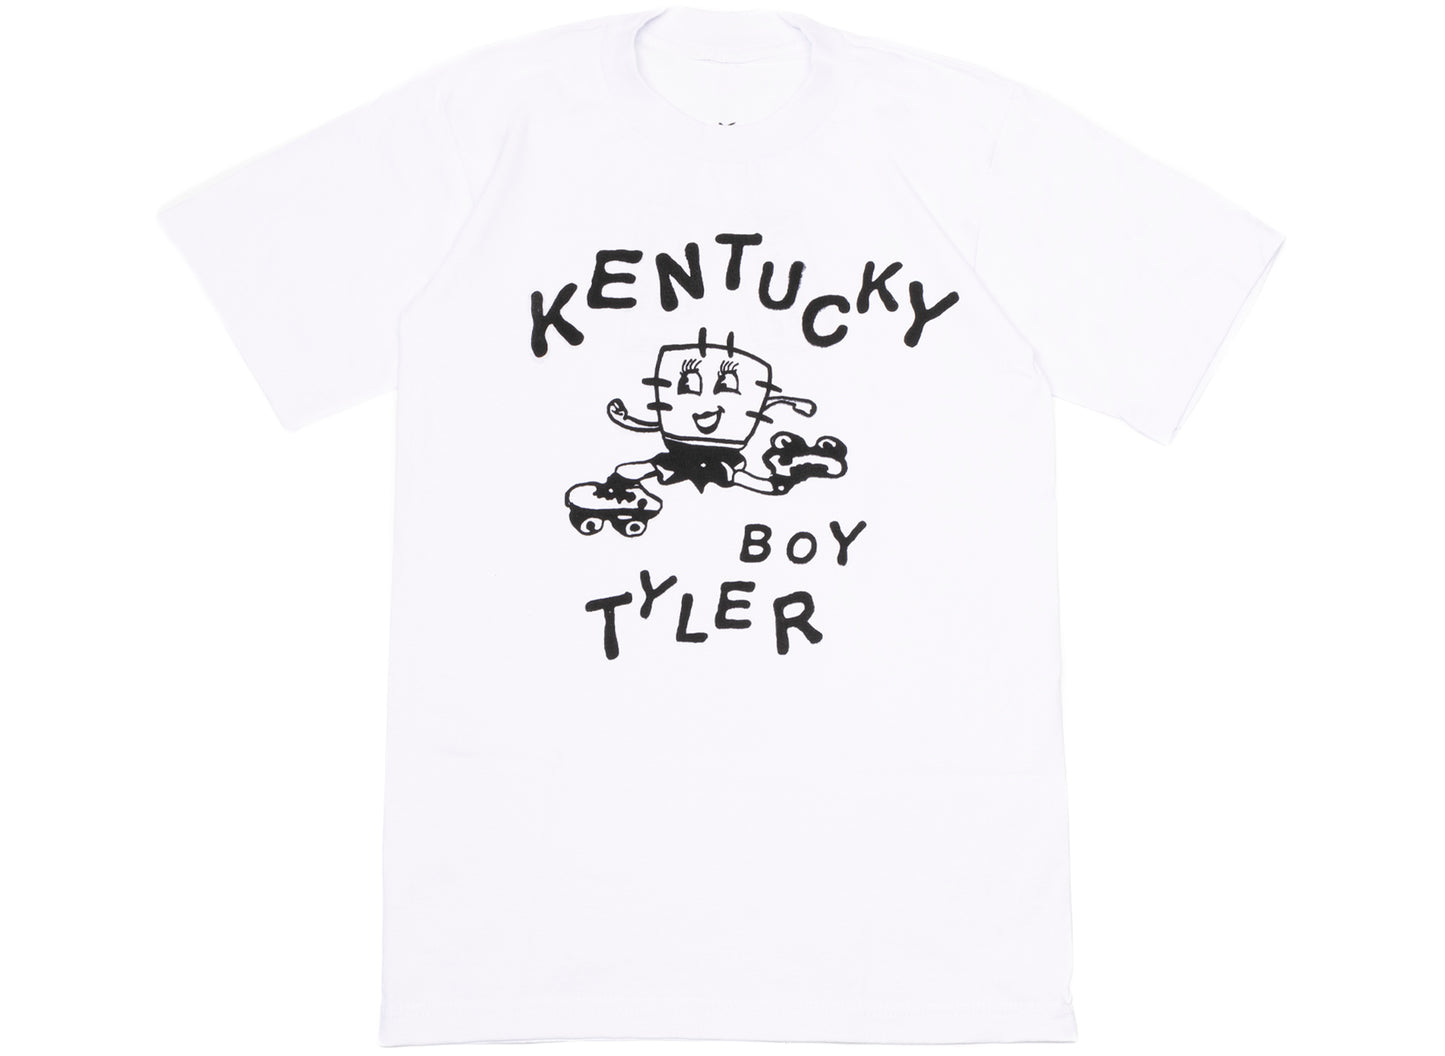 Kentucky Boy Tyler Frolick Short Sleeve Tee in White